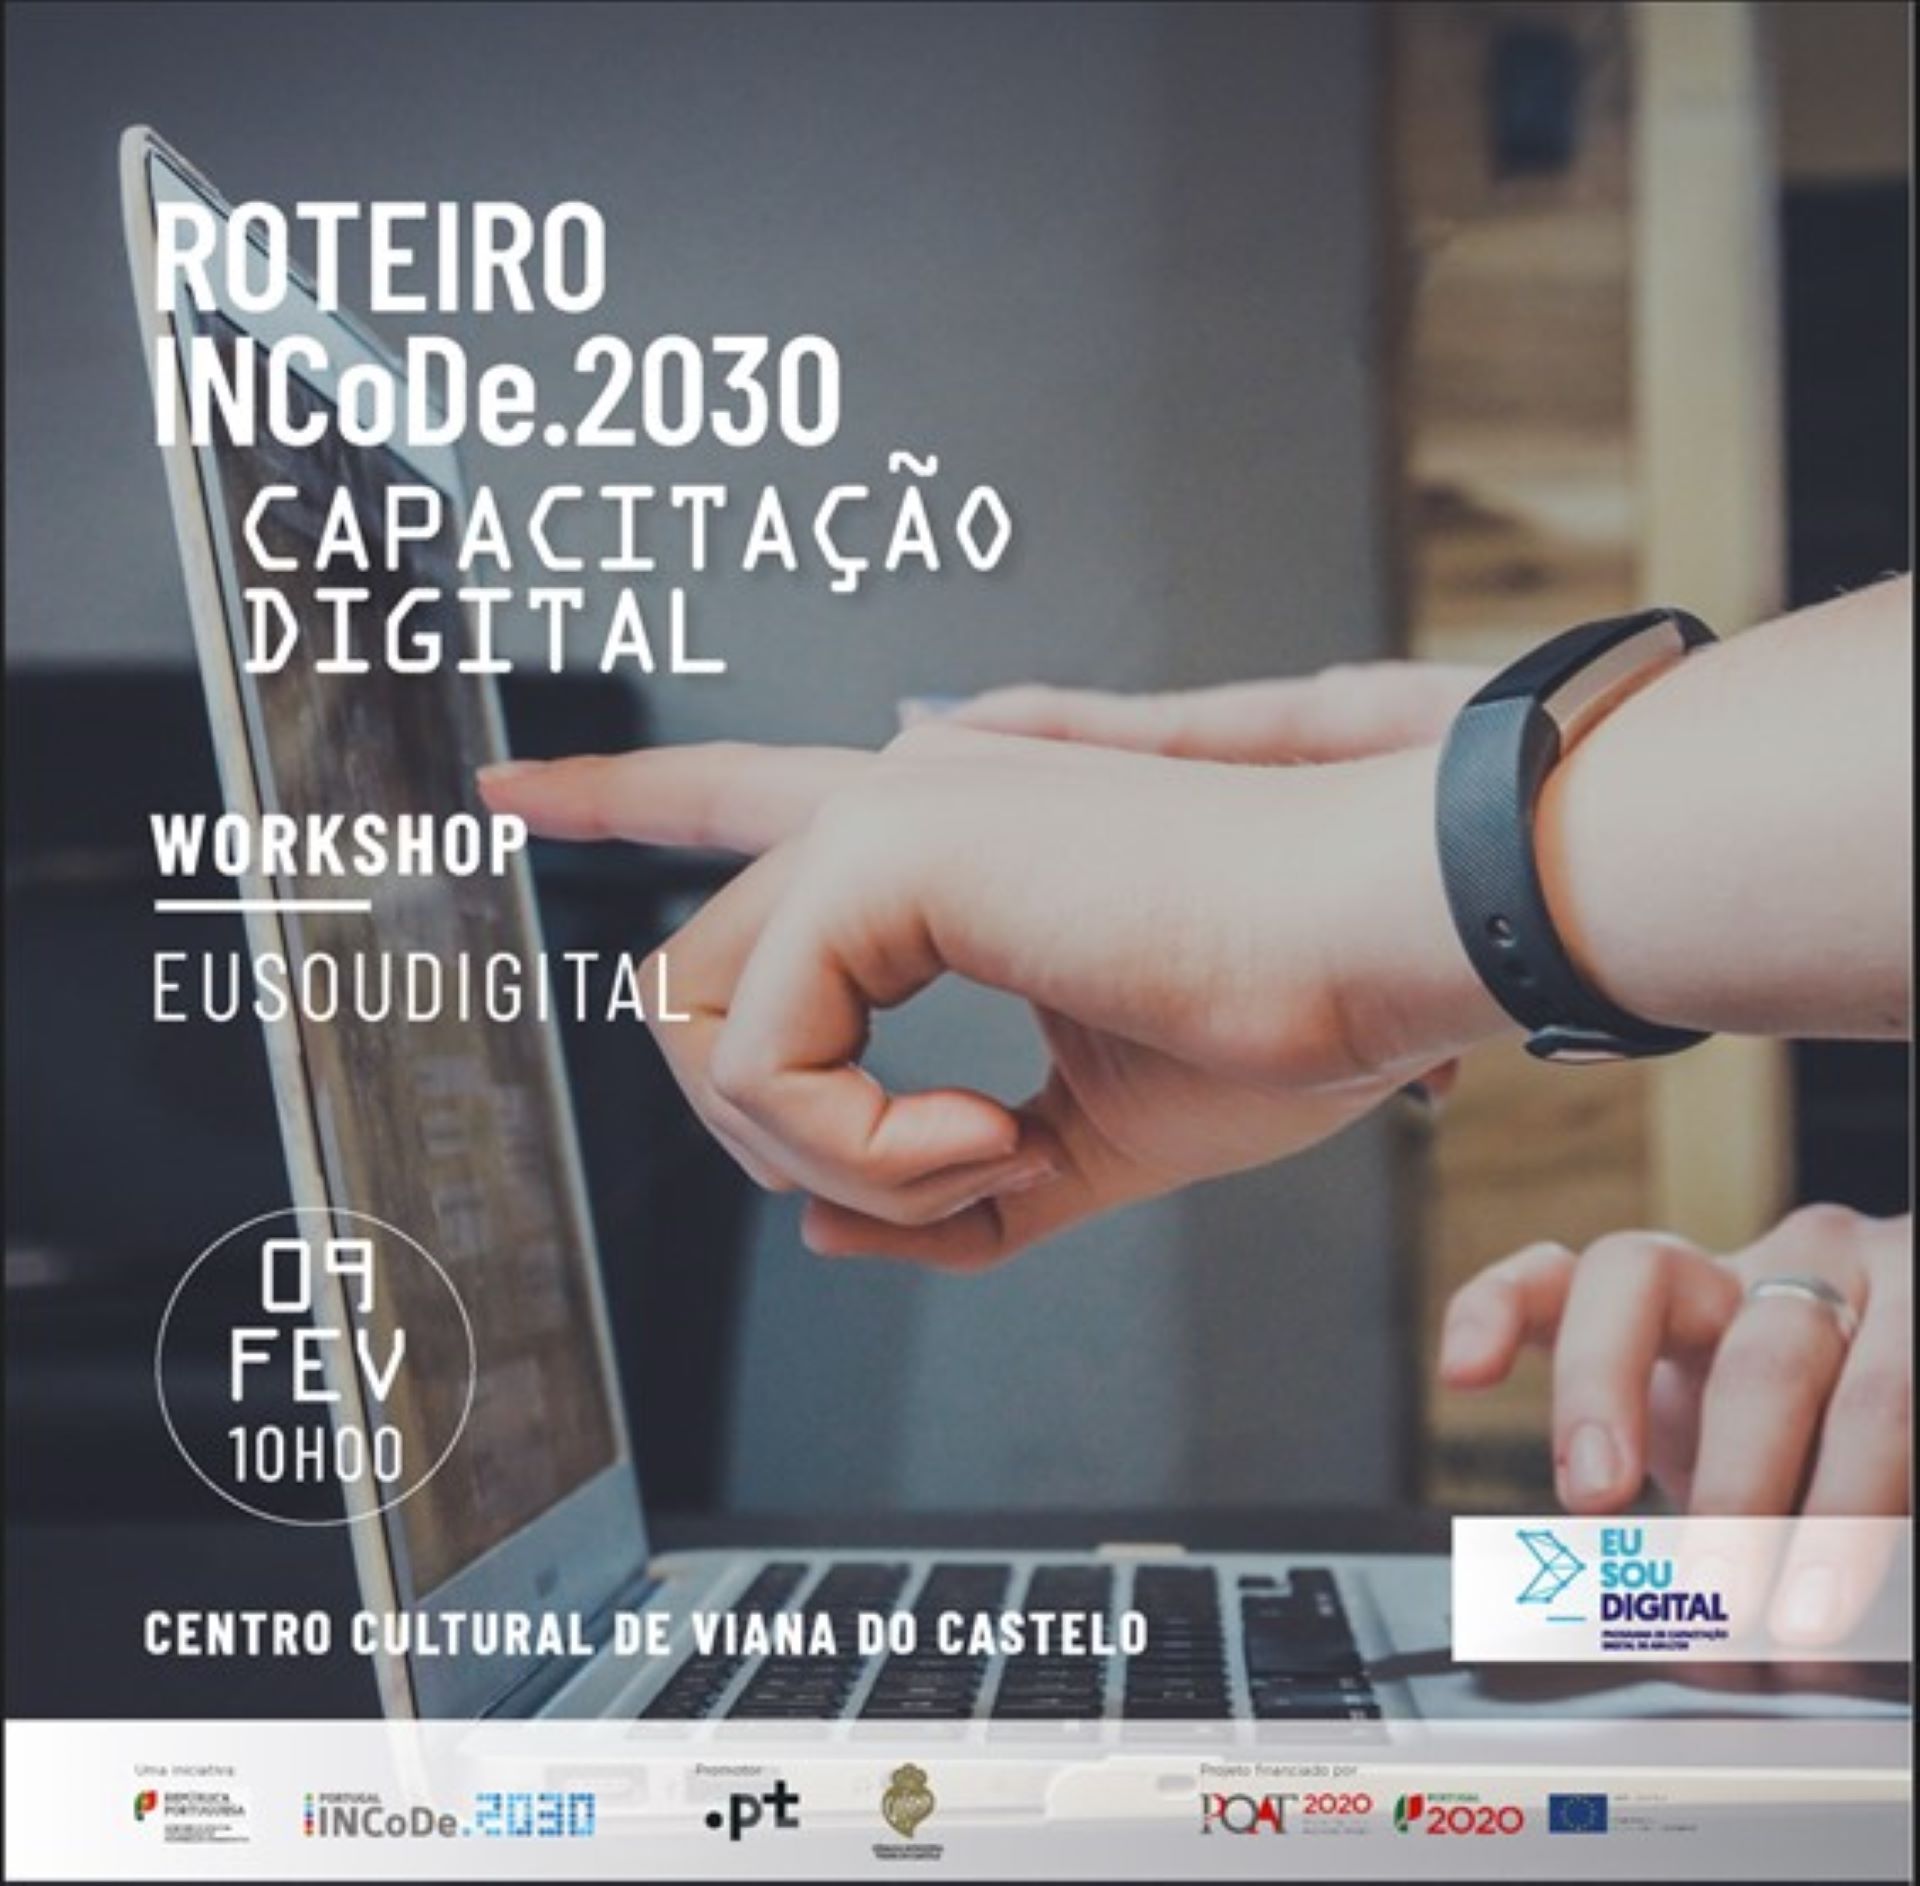 Workshop EUSOUDIGITAL – Roteiro INCoDe.2030